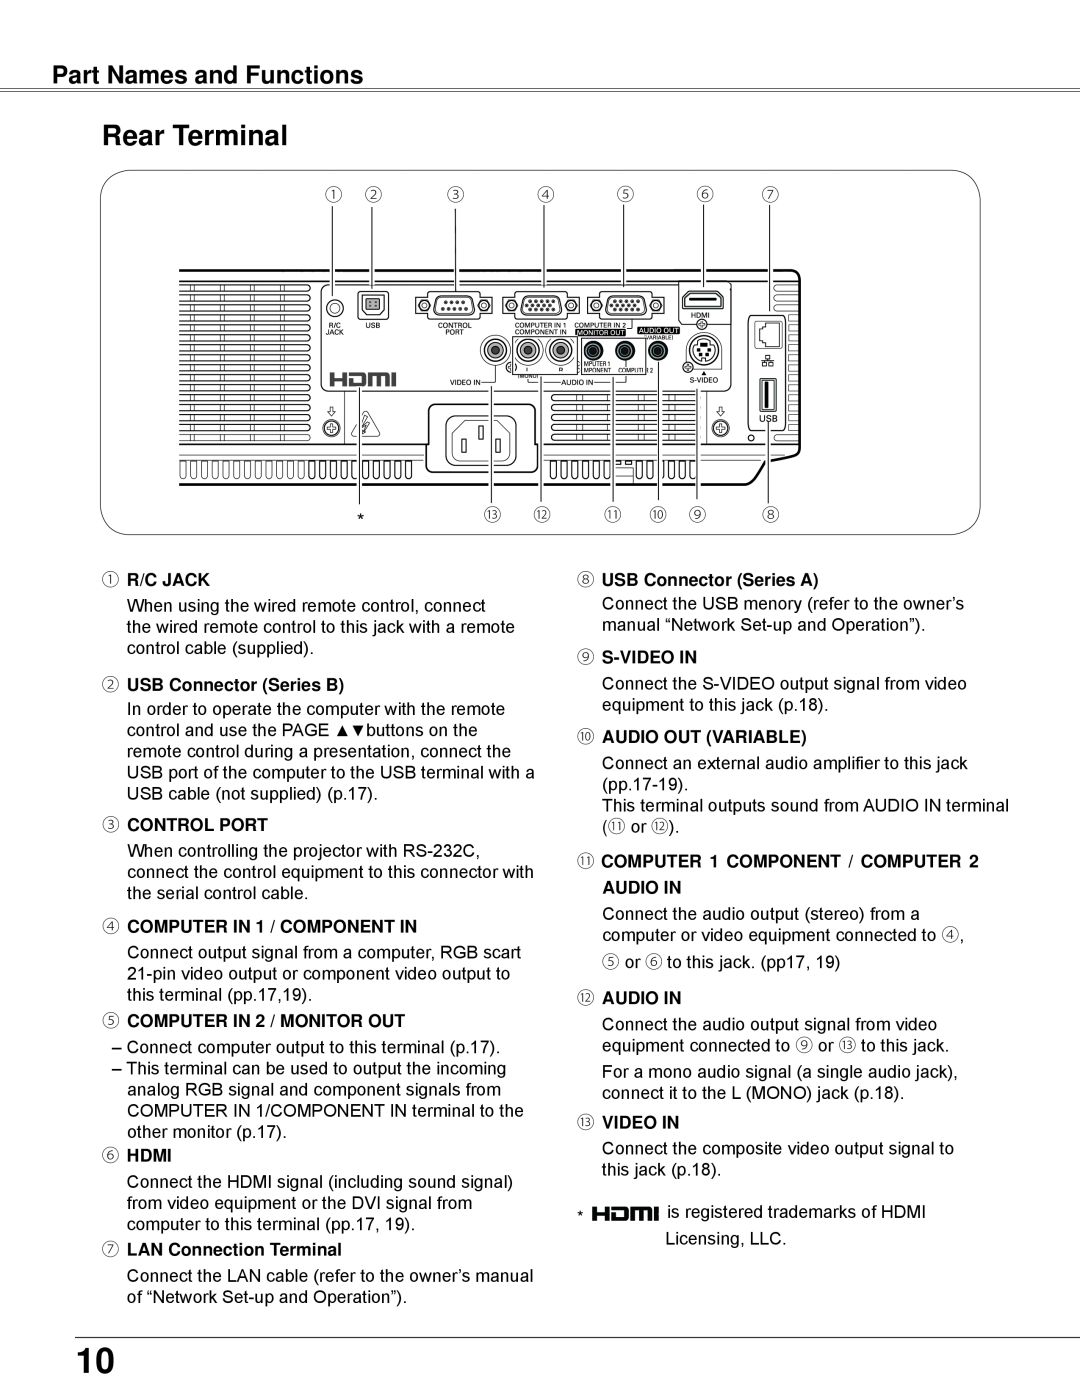 Eiki LC-WB42N Rear Terminal, Part Names and Functions, ① R/C JACK, ② USB Connector Series B, ③ CONTROL PORT, ⑥ HDMI 